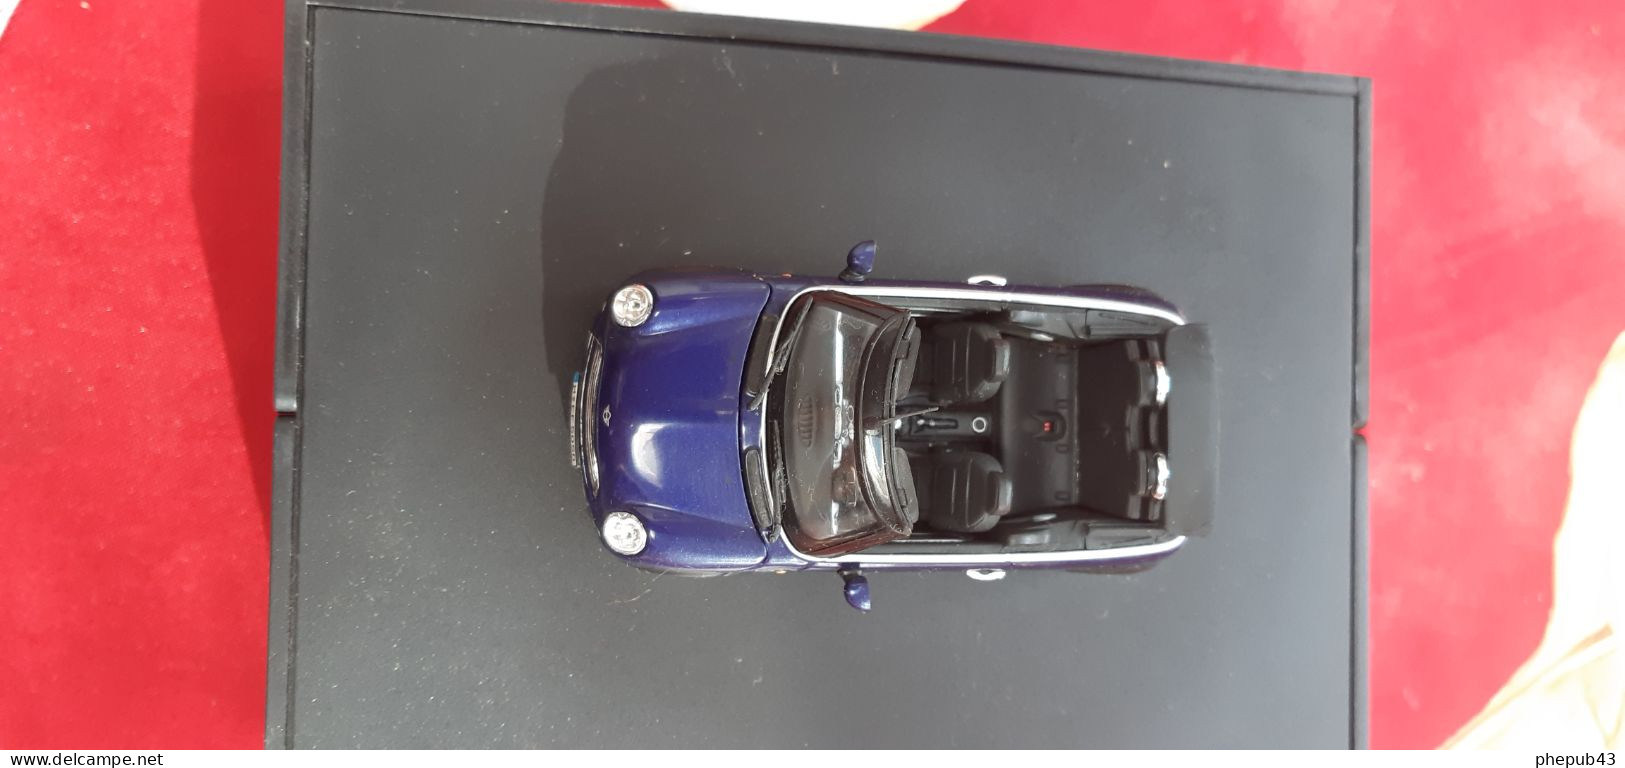 Mini Cooper Cabriolet Convertible R52 - Cool Blue - Minichamps (Box Mini) - Minichamps